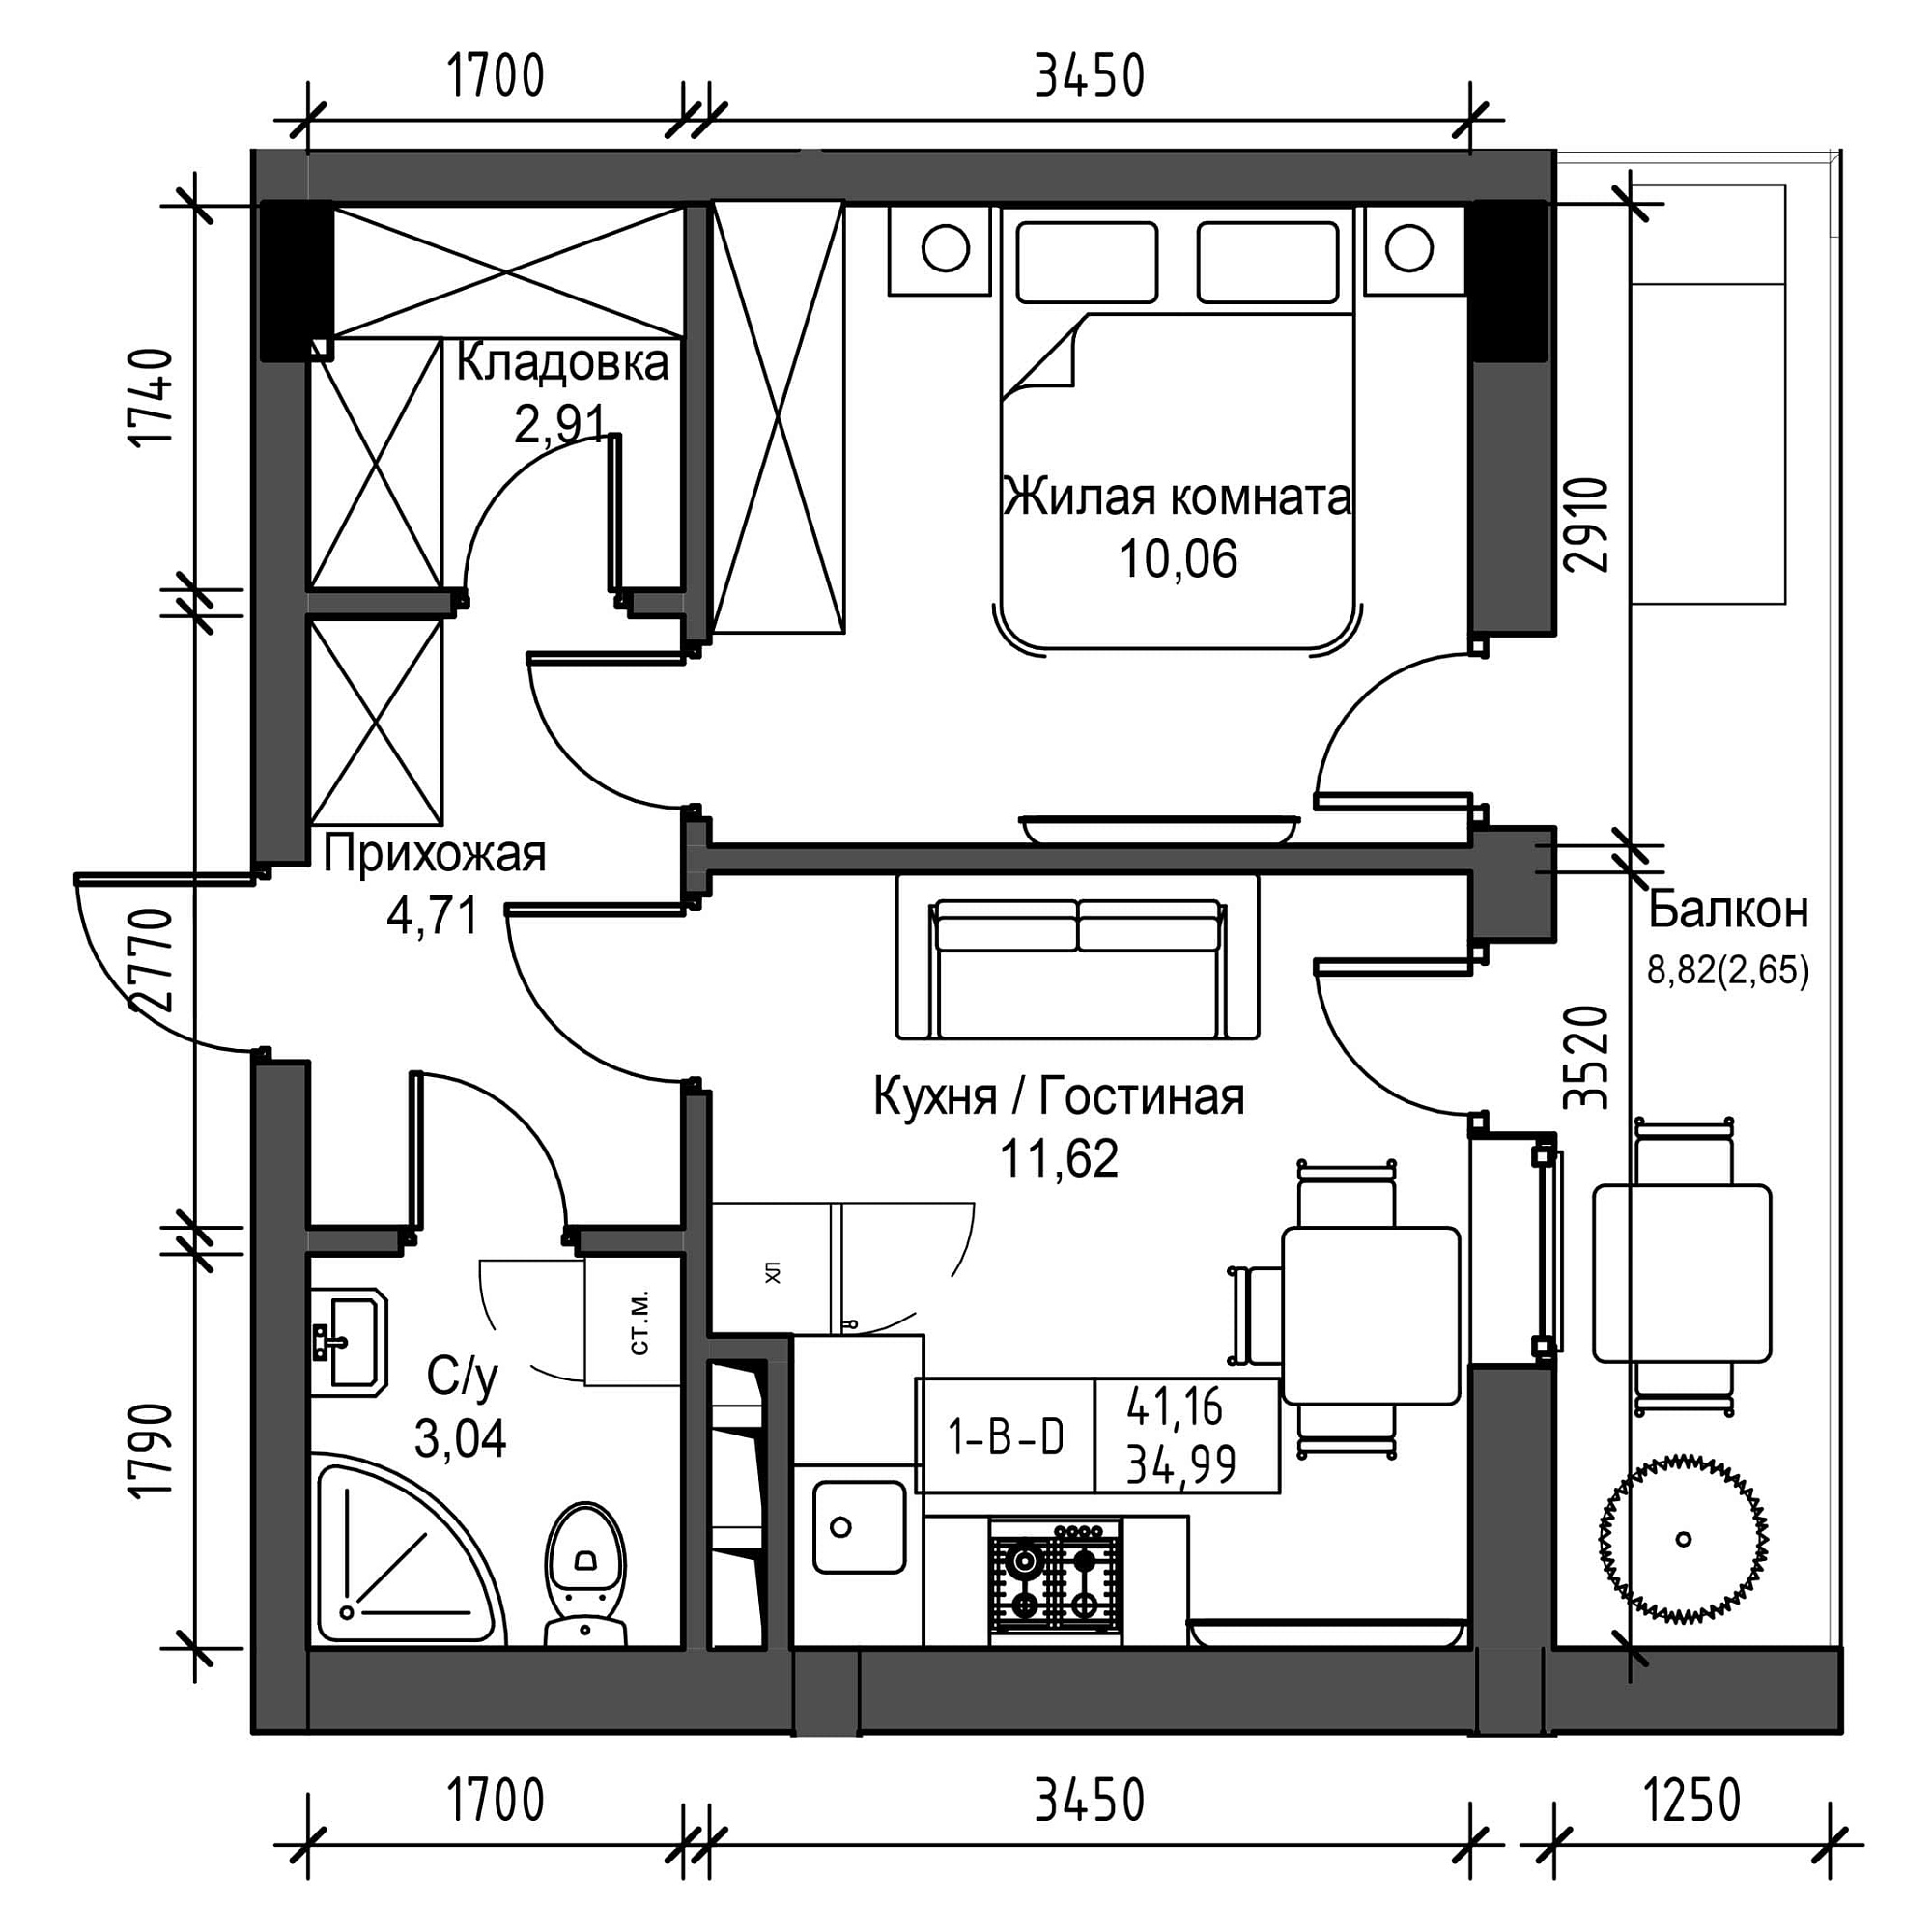 Planning 1-rm flats area 34.99m2, UM-001-07/0024.